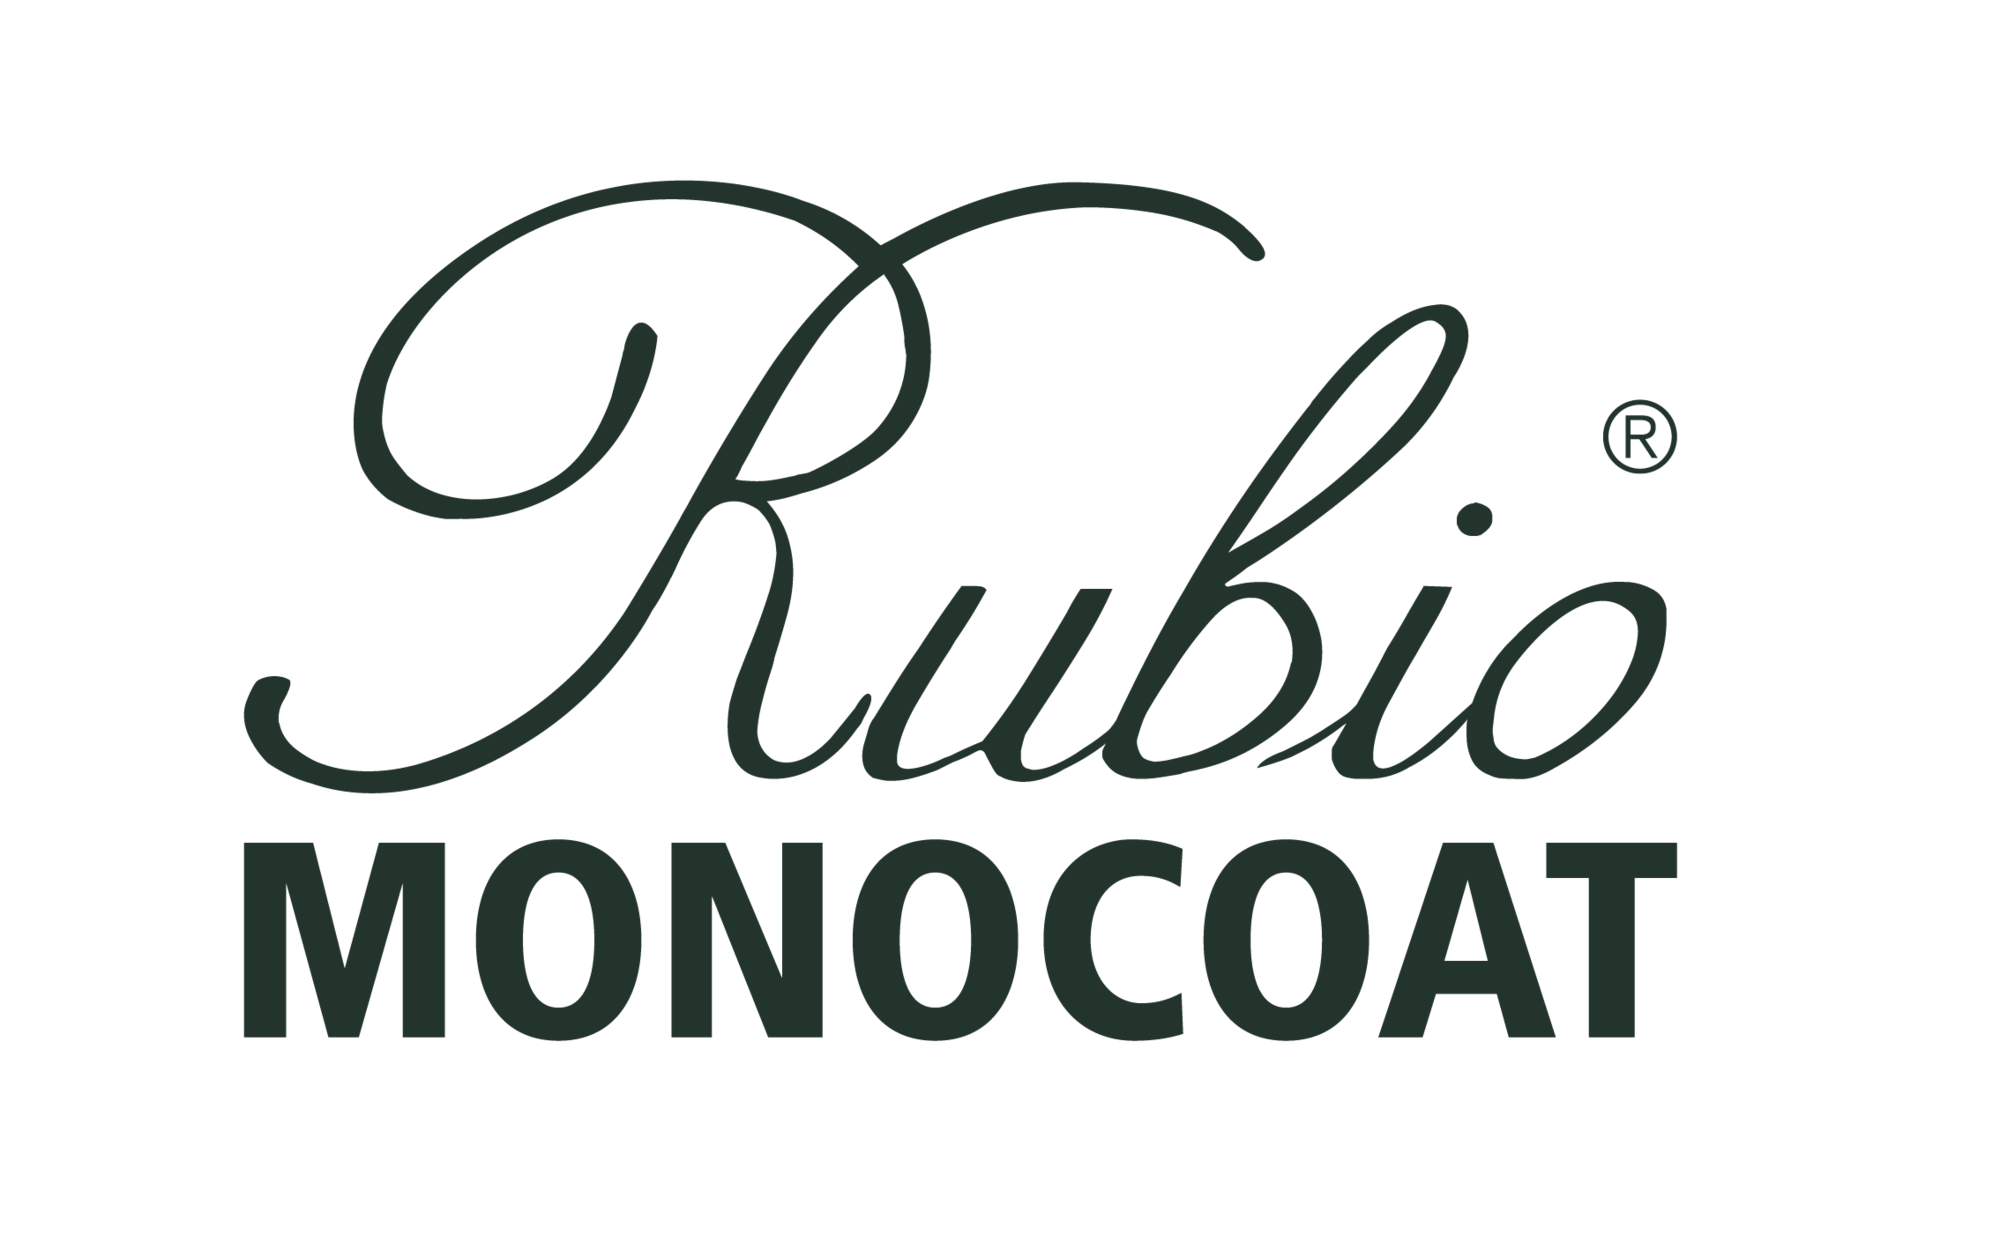 Houtolie Rubio Monocoat